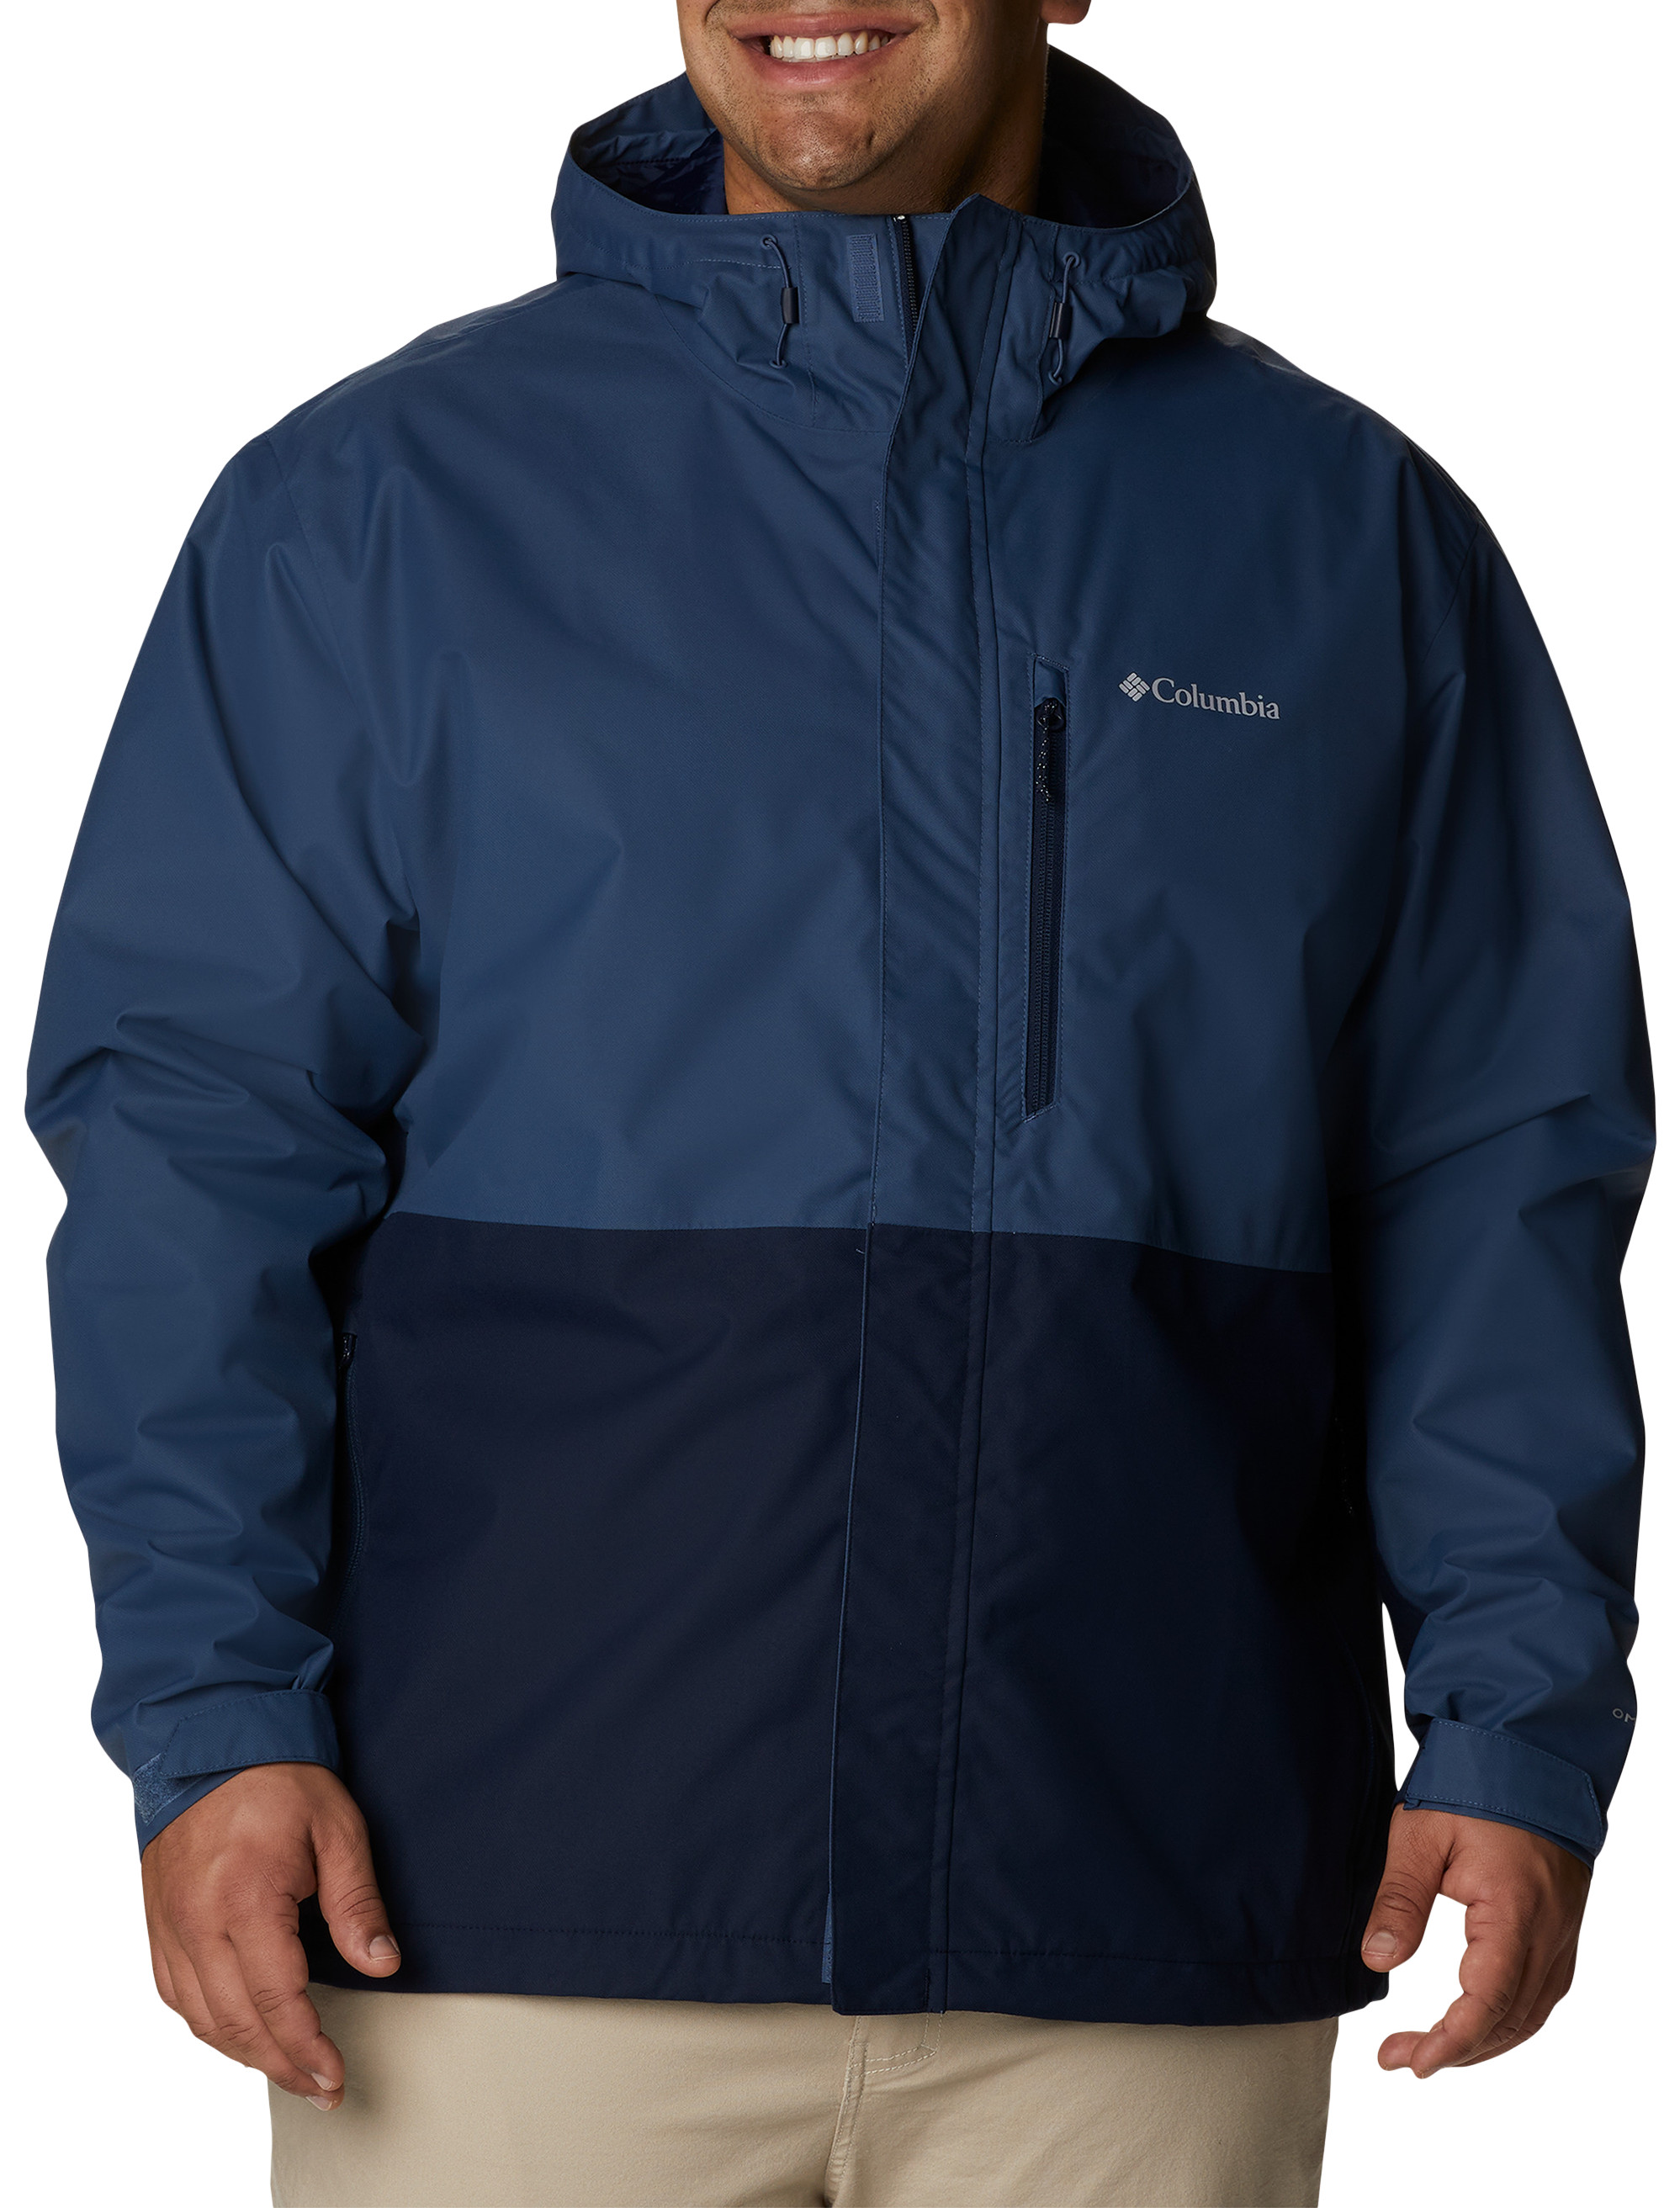 Nautica Men's Hooded Parka Jacket, Water and Wind Resistant, True